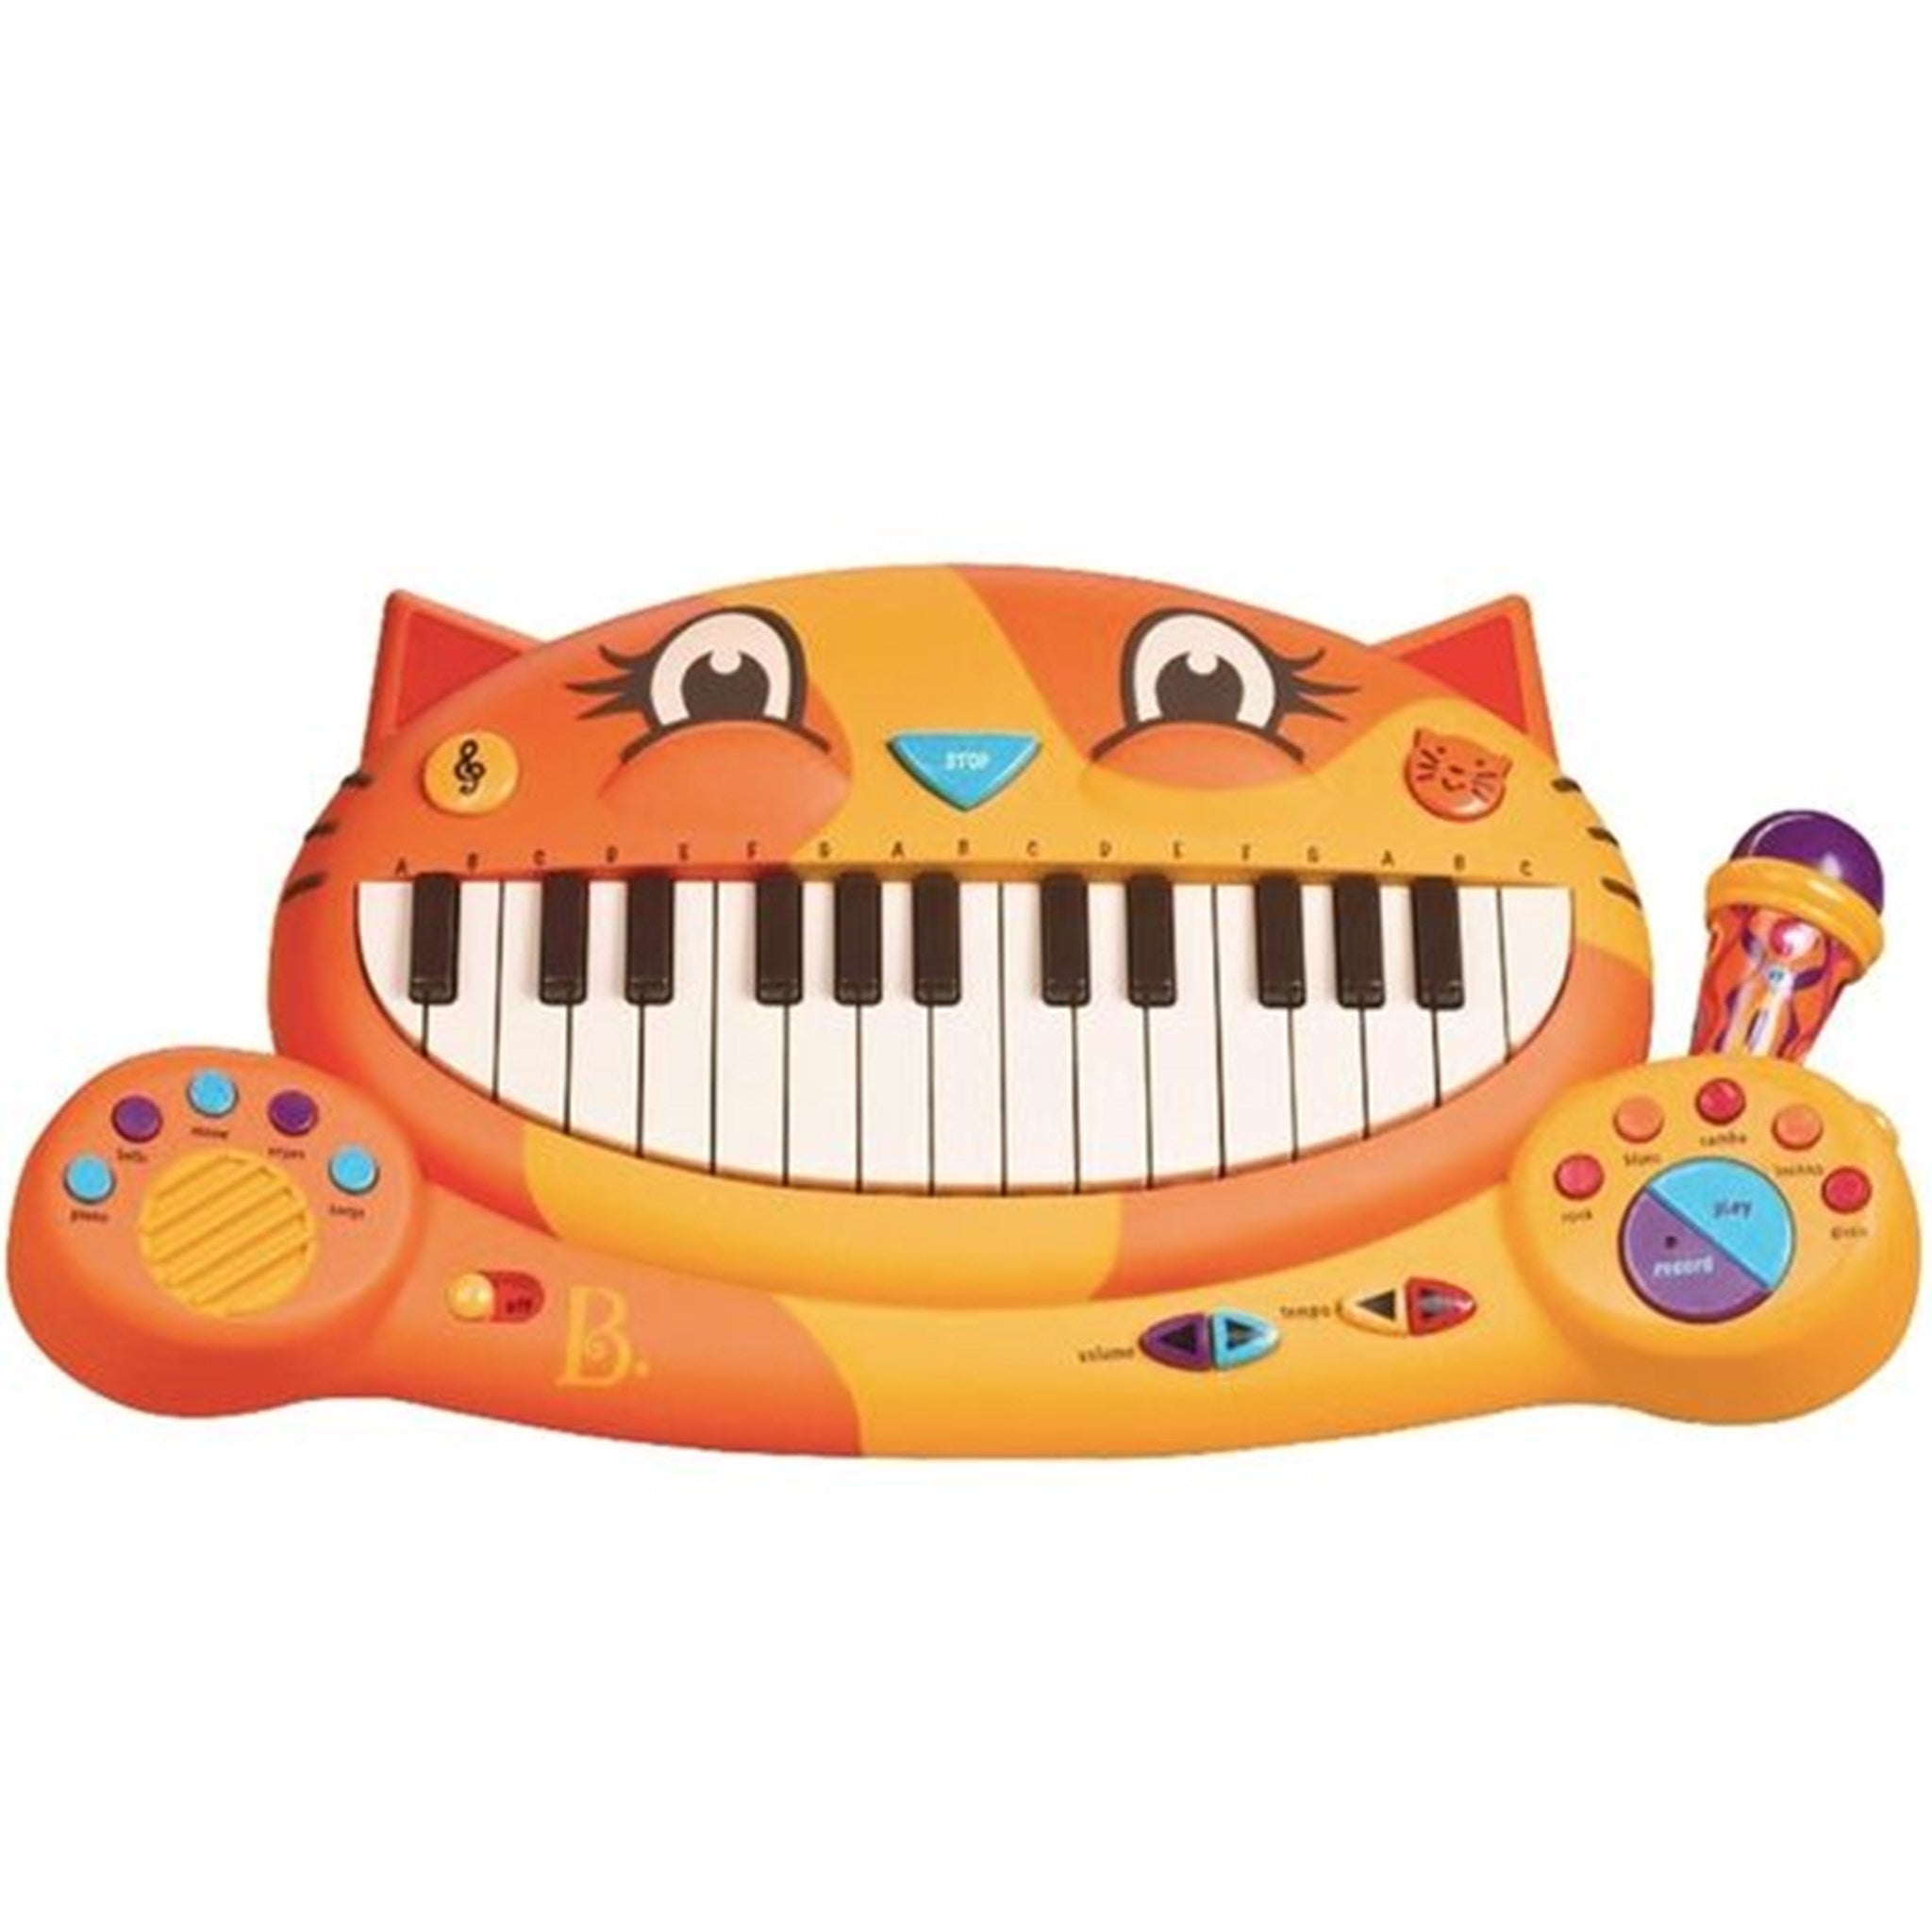 B-toys Meowsic - Piano